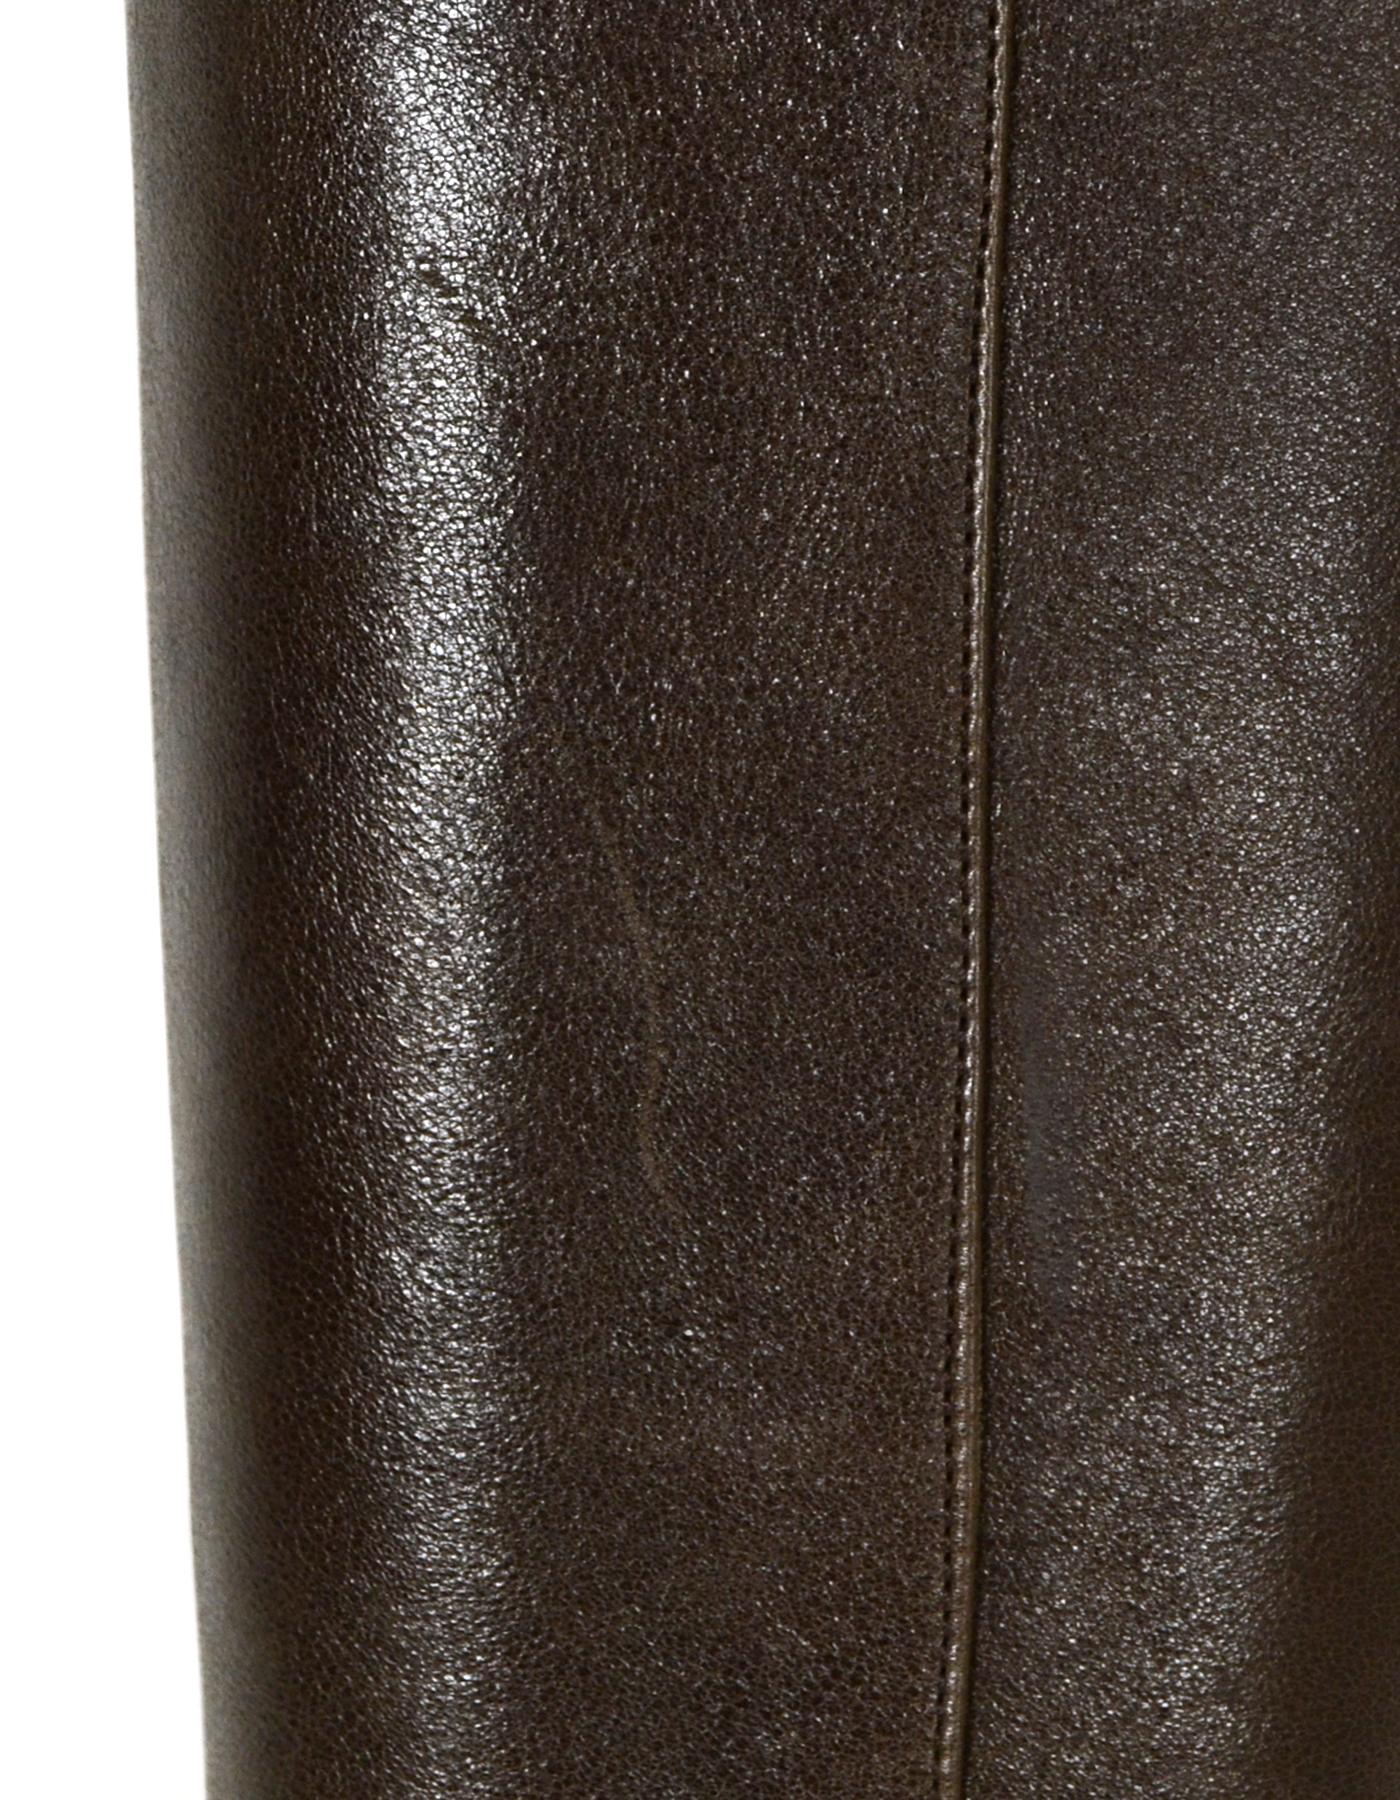 Black Barbara Bui Brown Leather Knee High Boots w/ Gold Chain & Heels sz 37